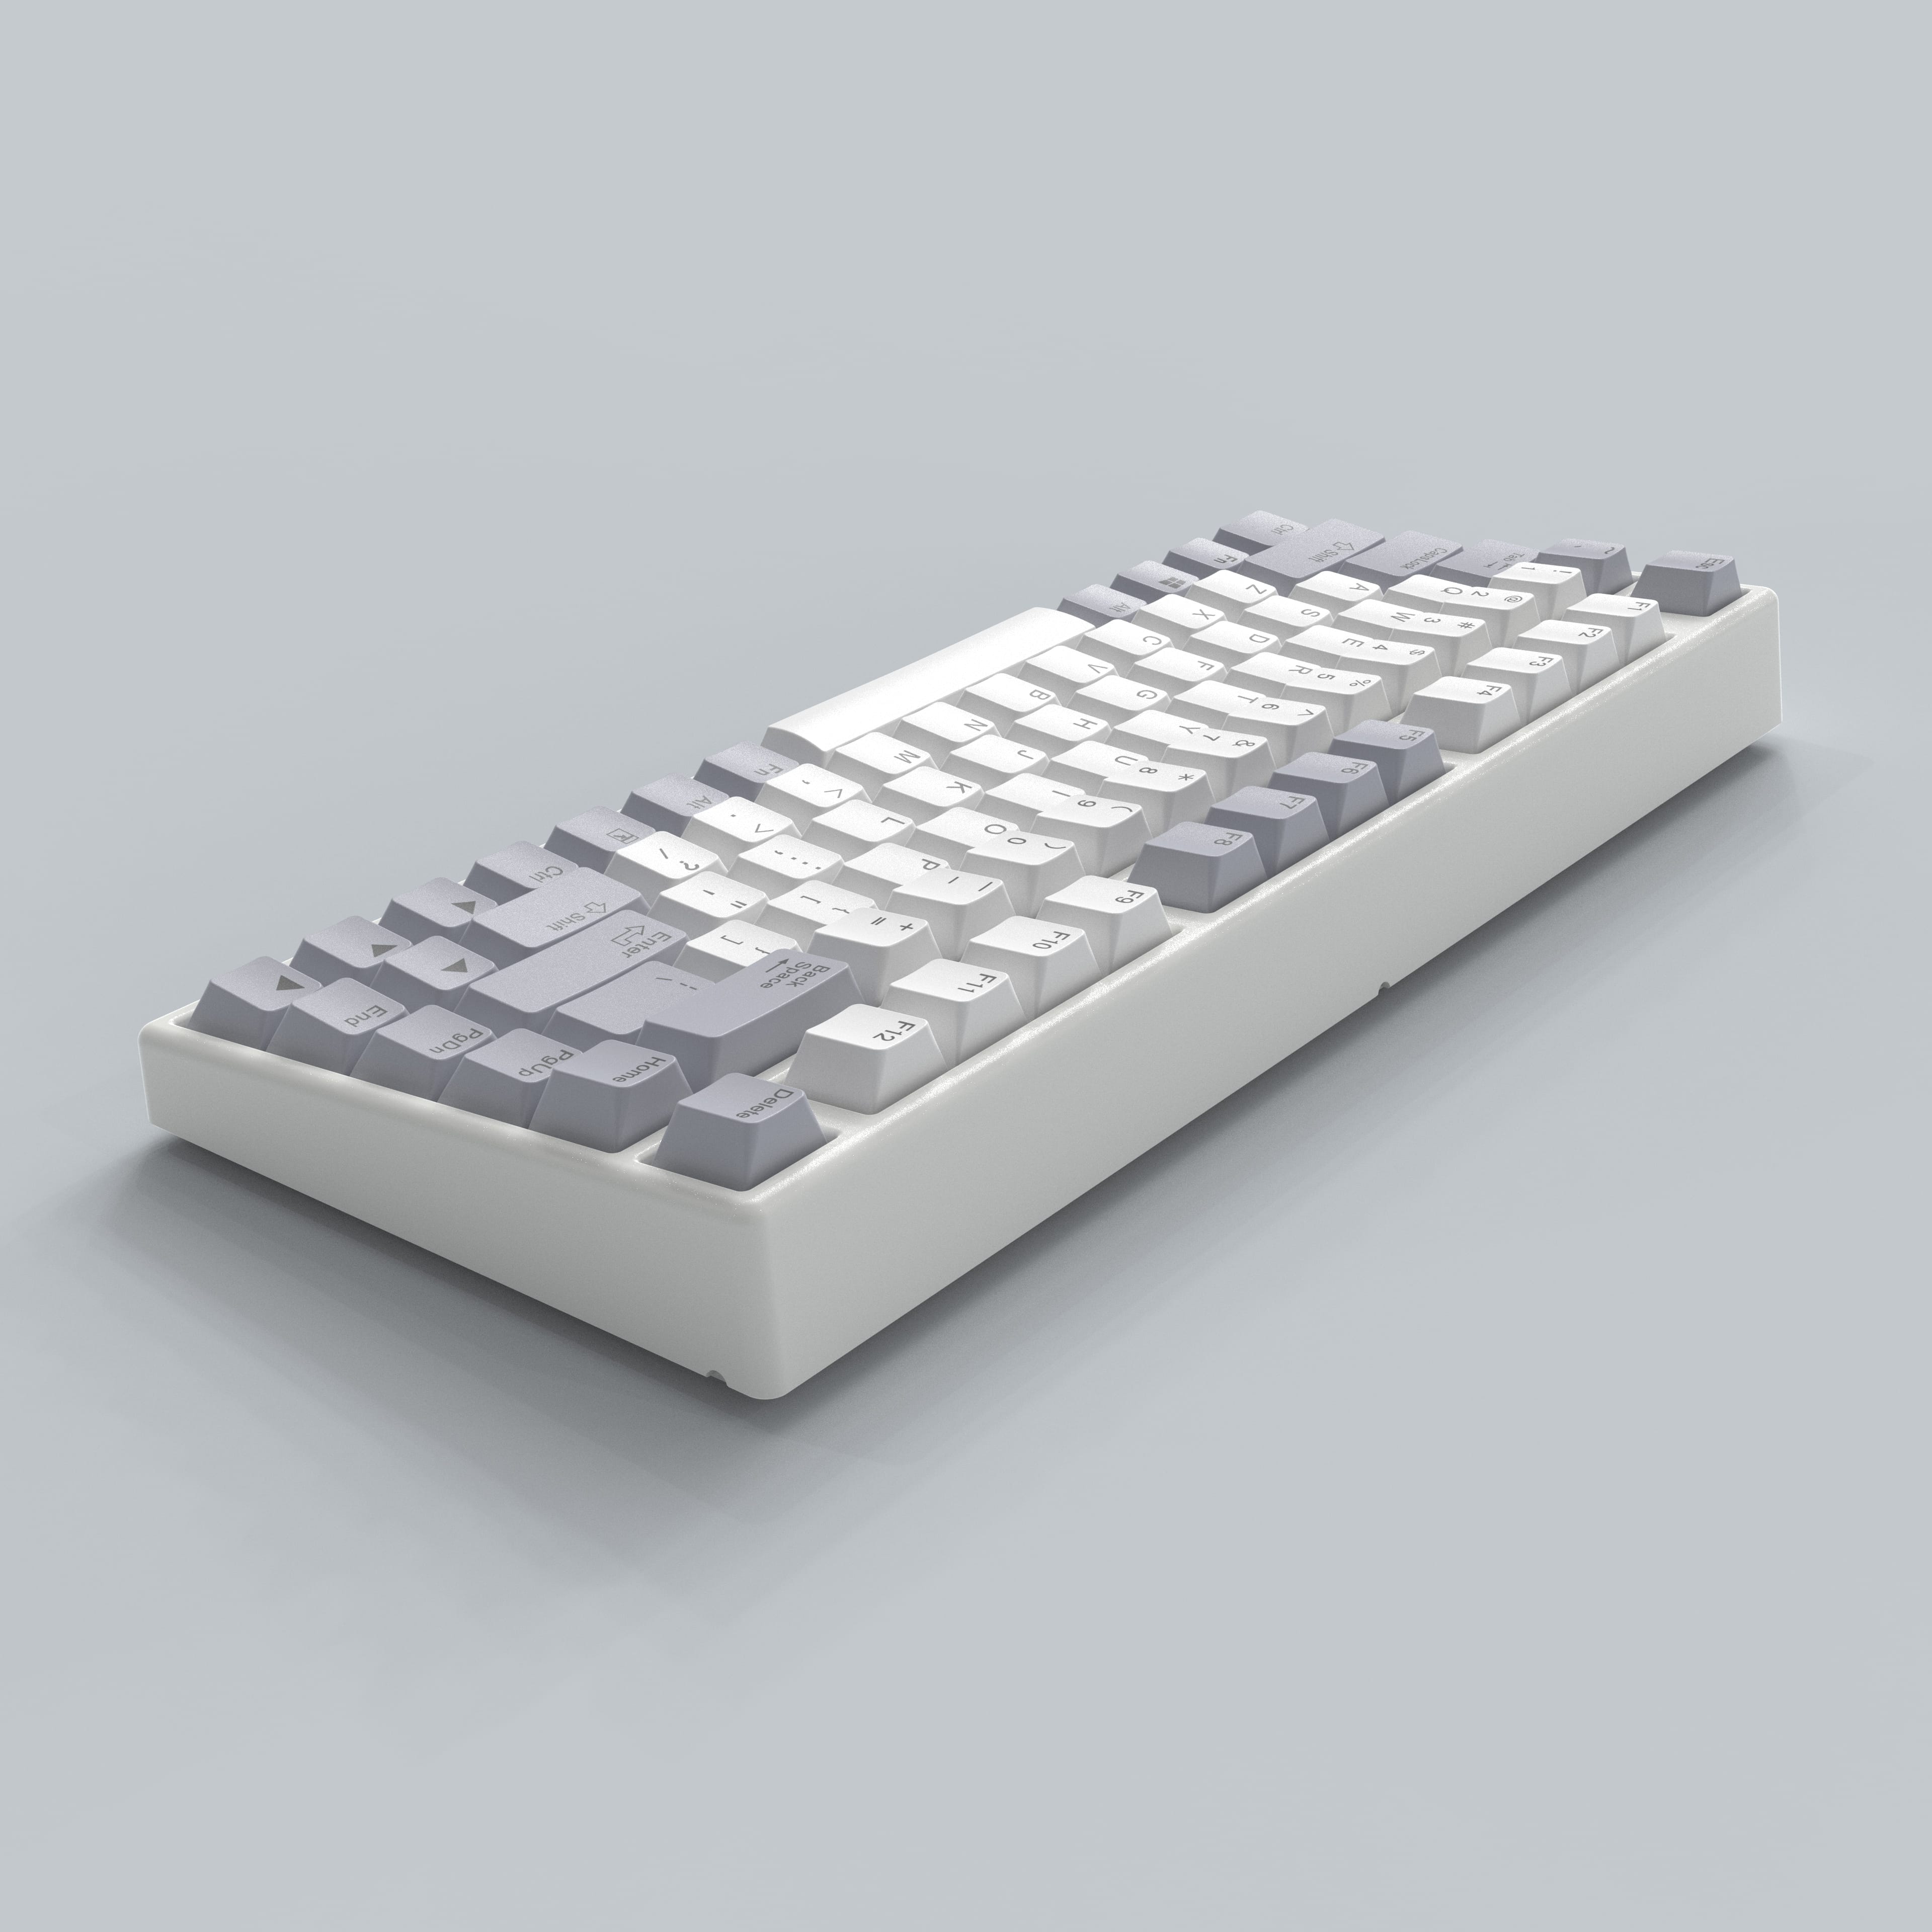 NIZ Keyboard MICRO 84 Capacitive Keyboard